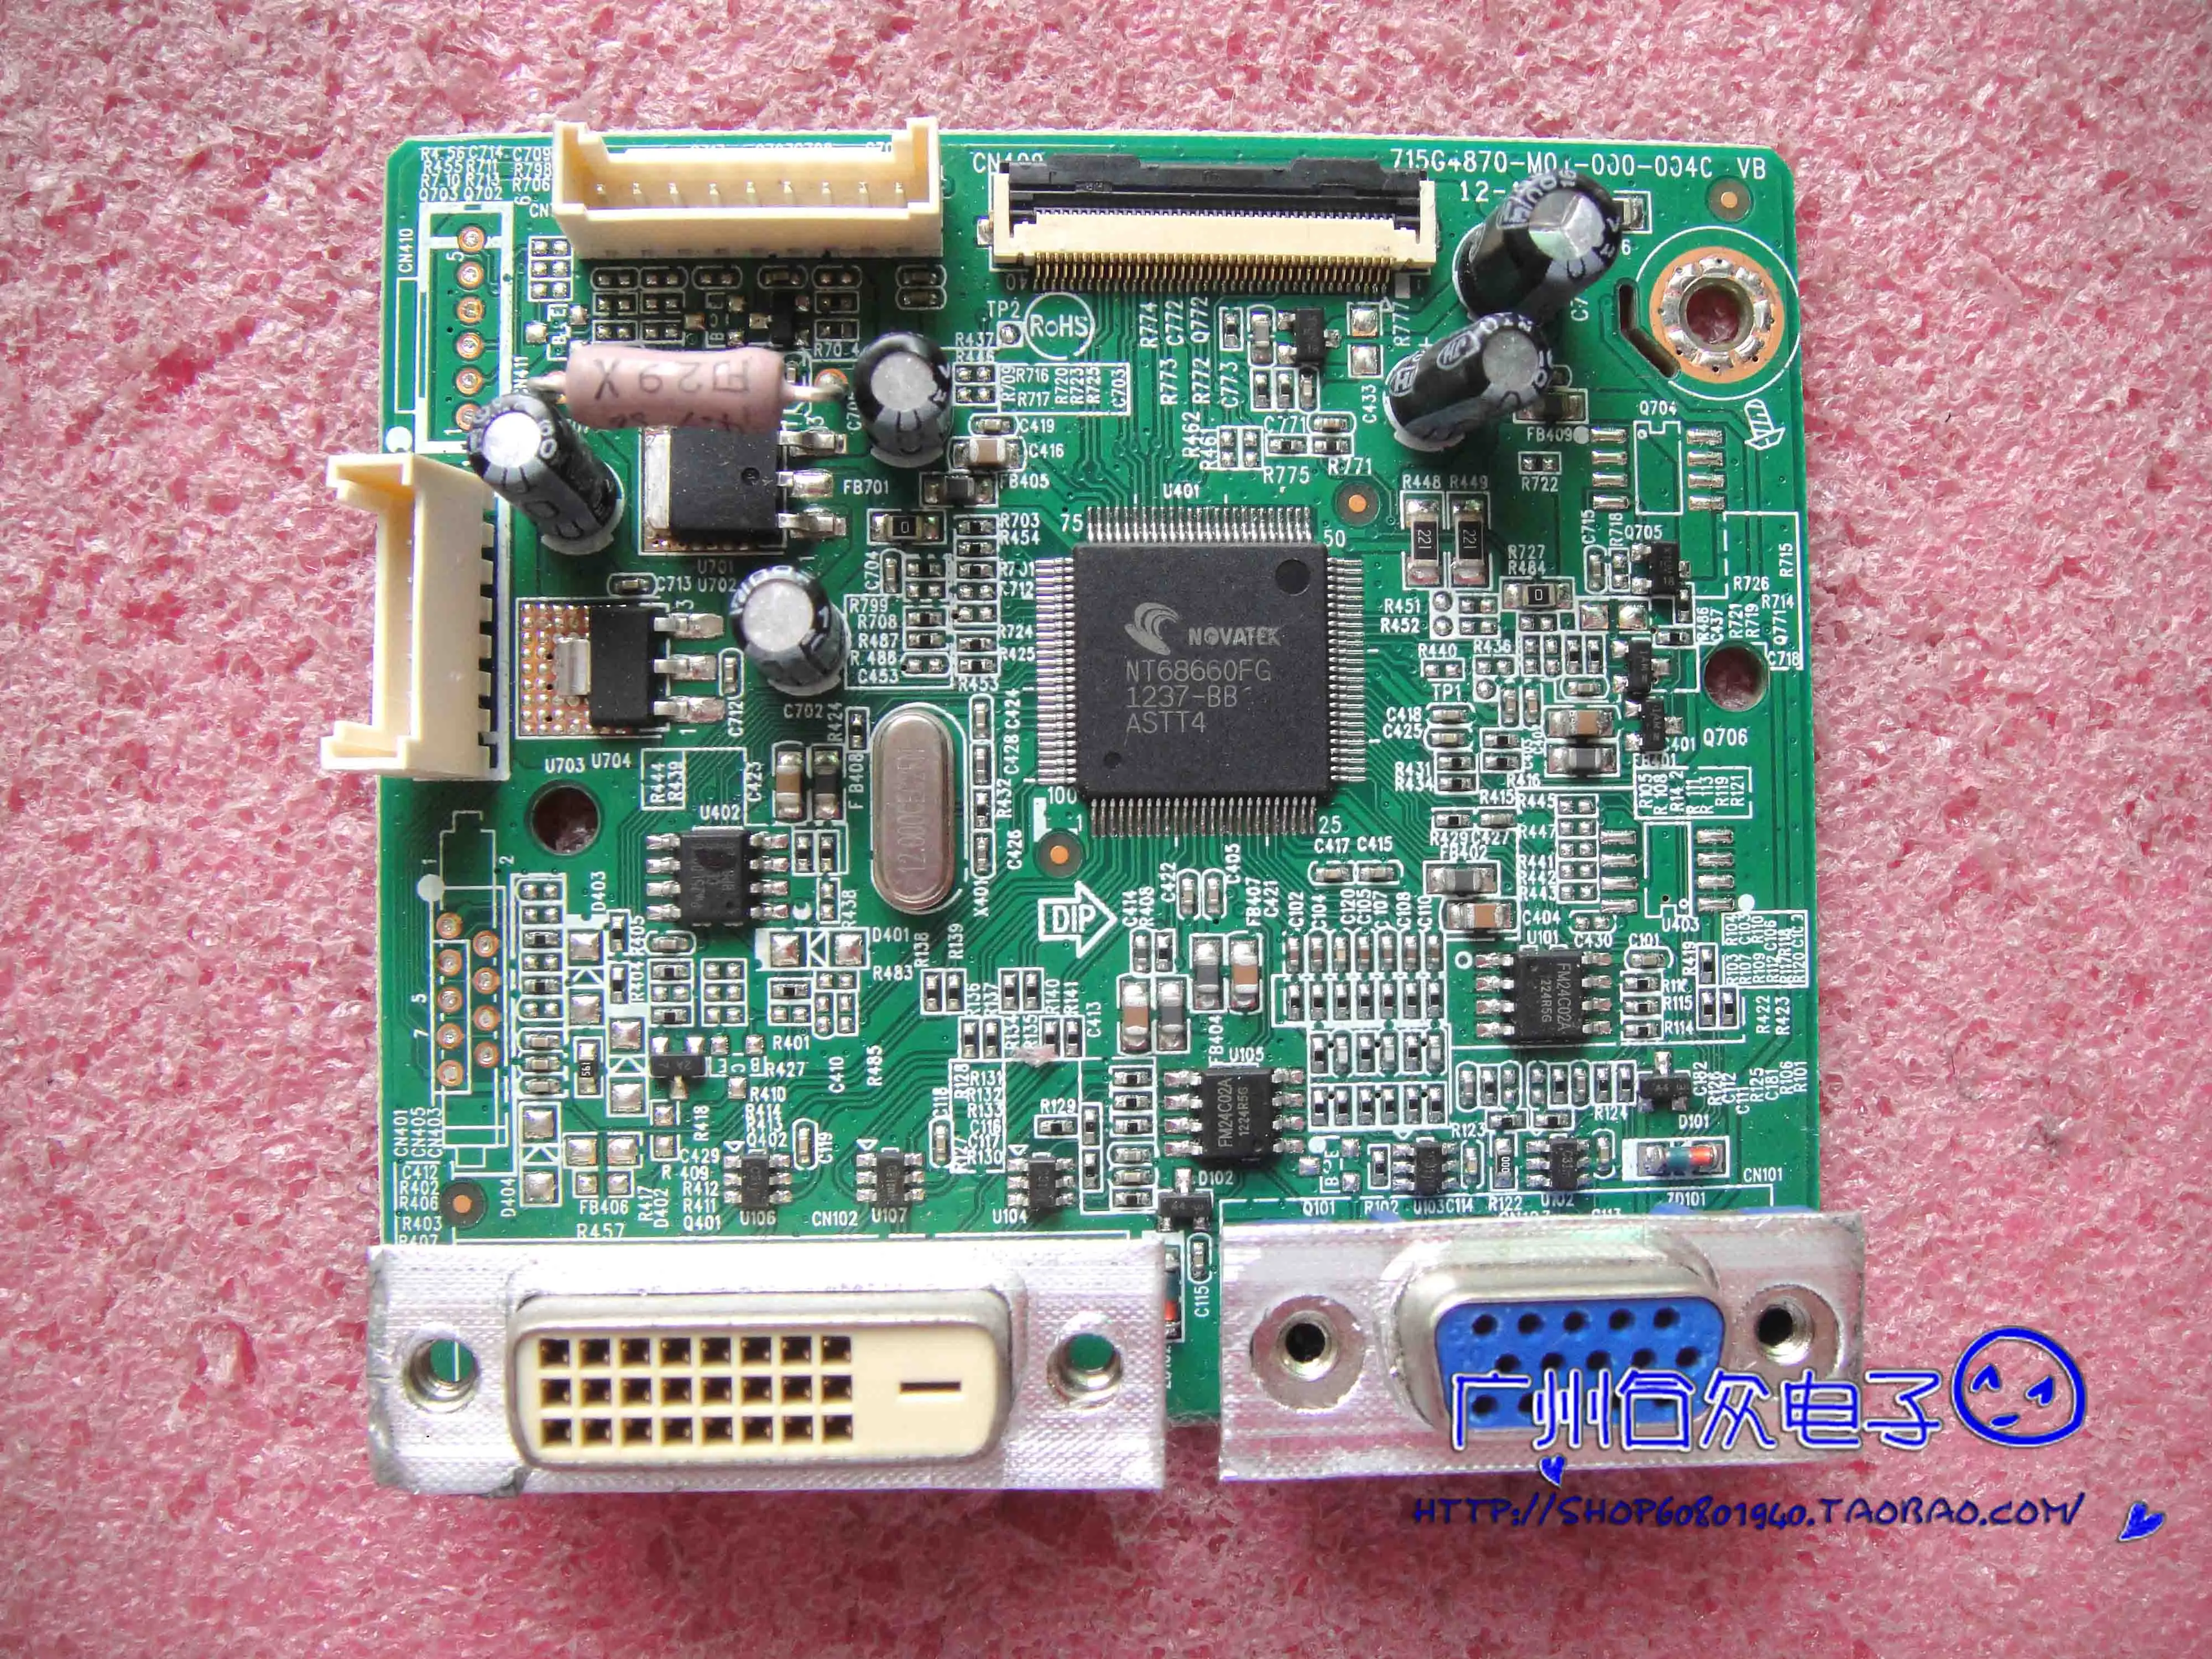 

Original second-hand 166V3L 166V3LSB/93 driven plate motherboard 715G4870-M01-000-004C